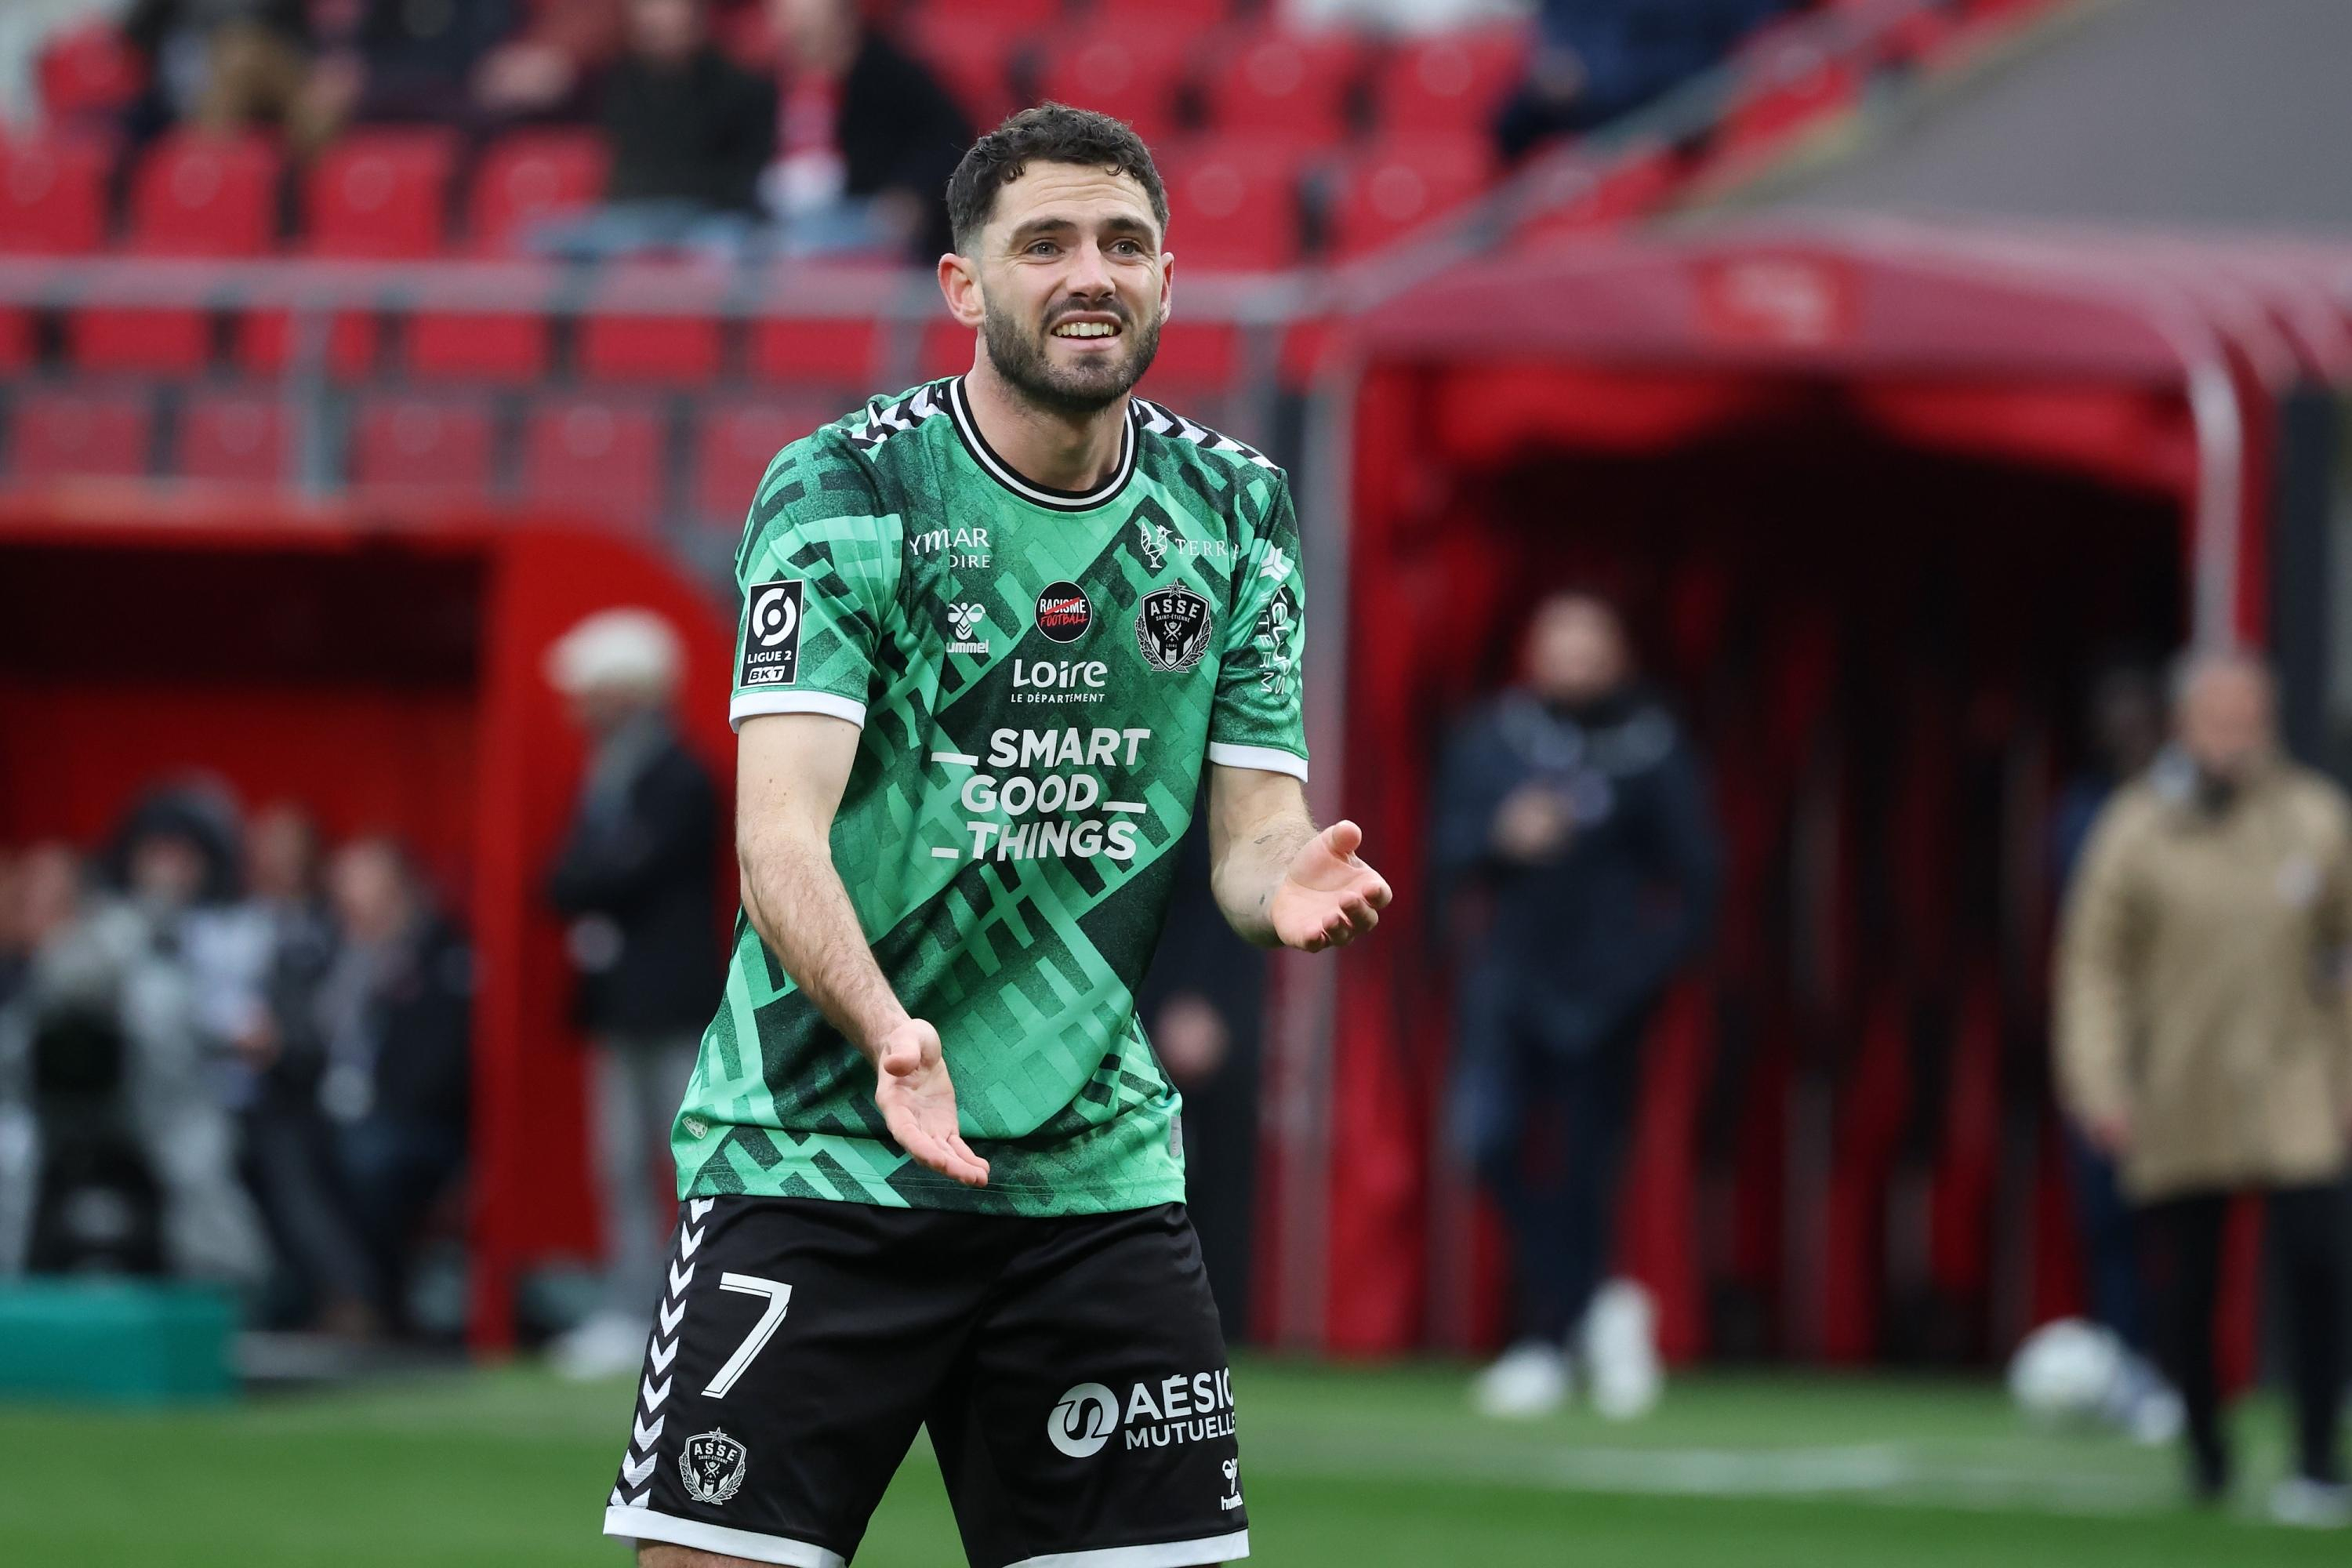 Ligue 2: AS Saint-Étienne loses its major partner, Smart Good Things